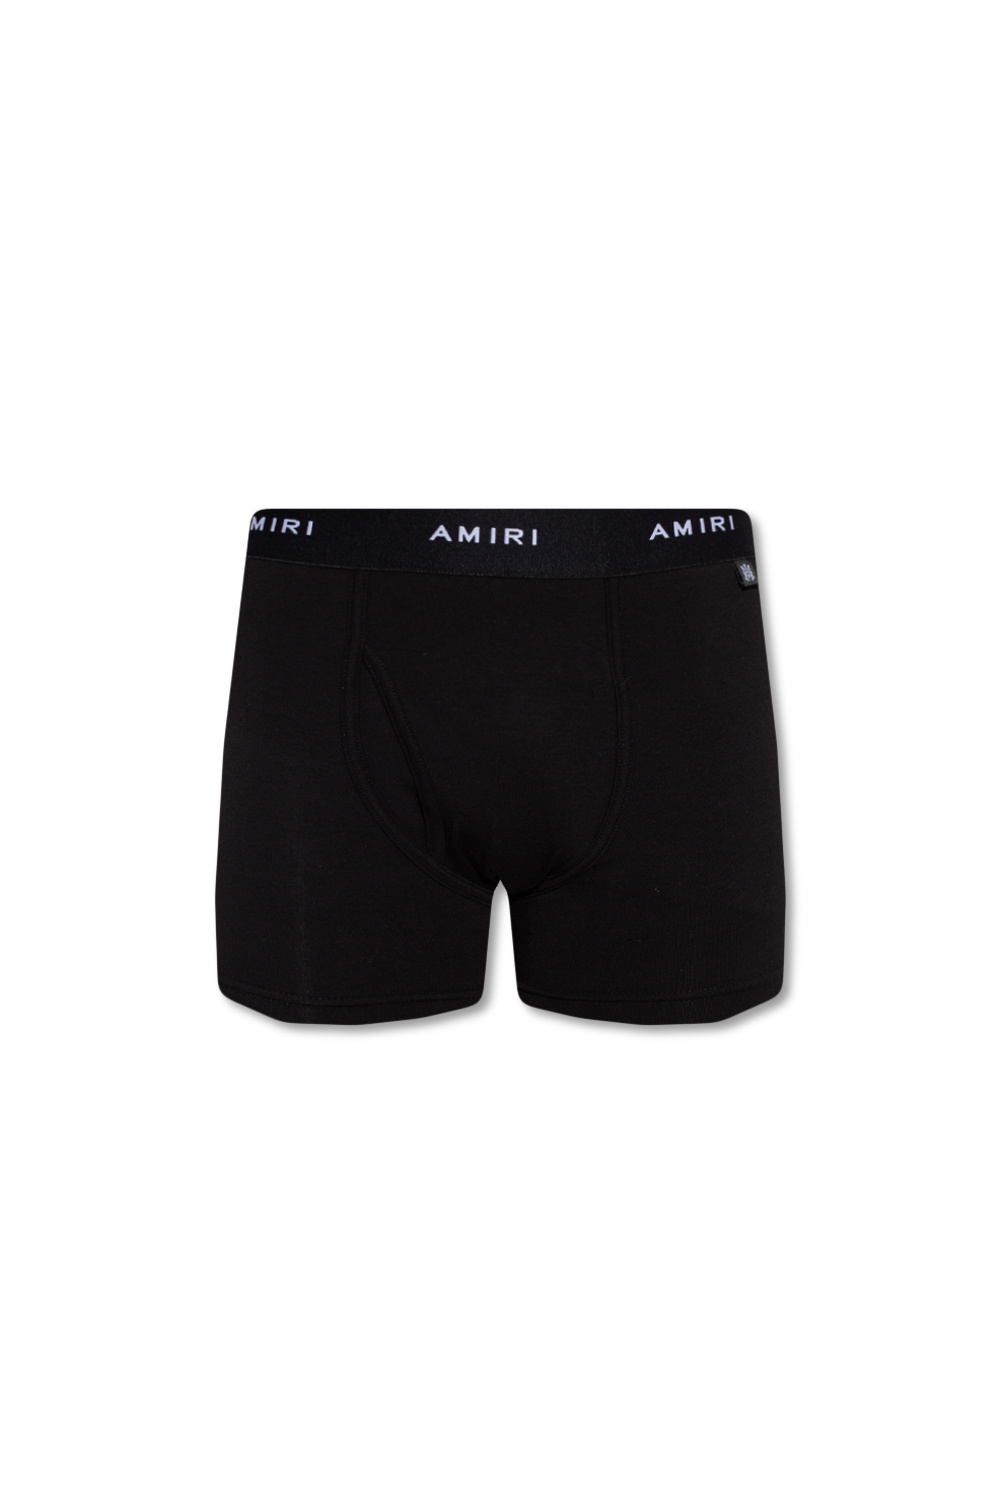 Amiri Boxers with logo | Men's Clothing | Vitkac